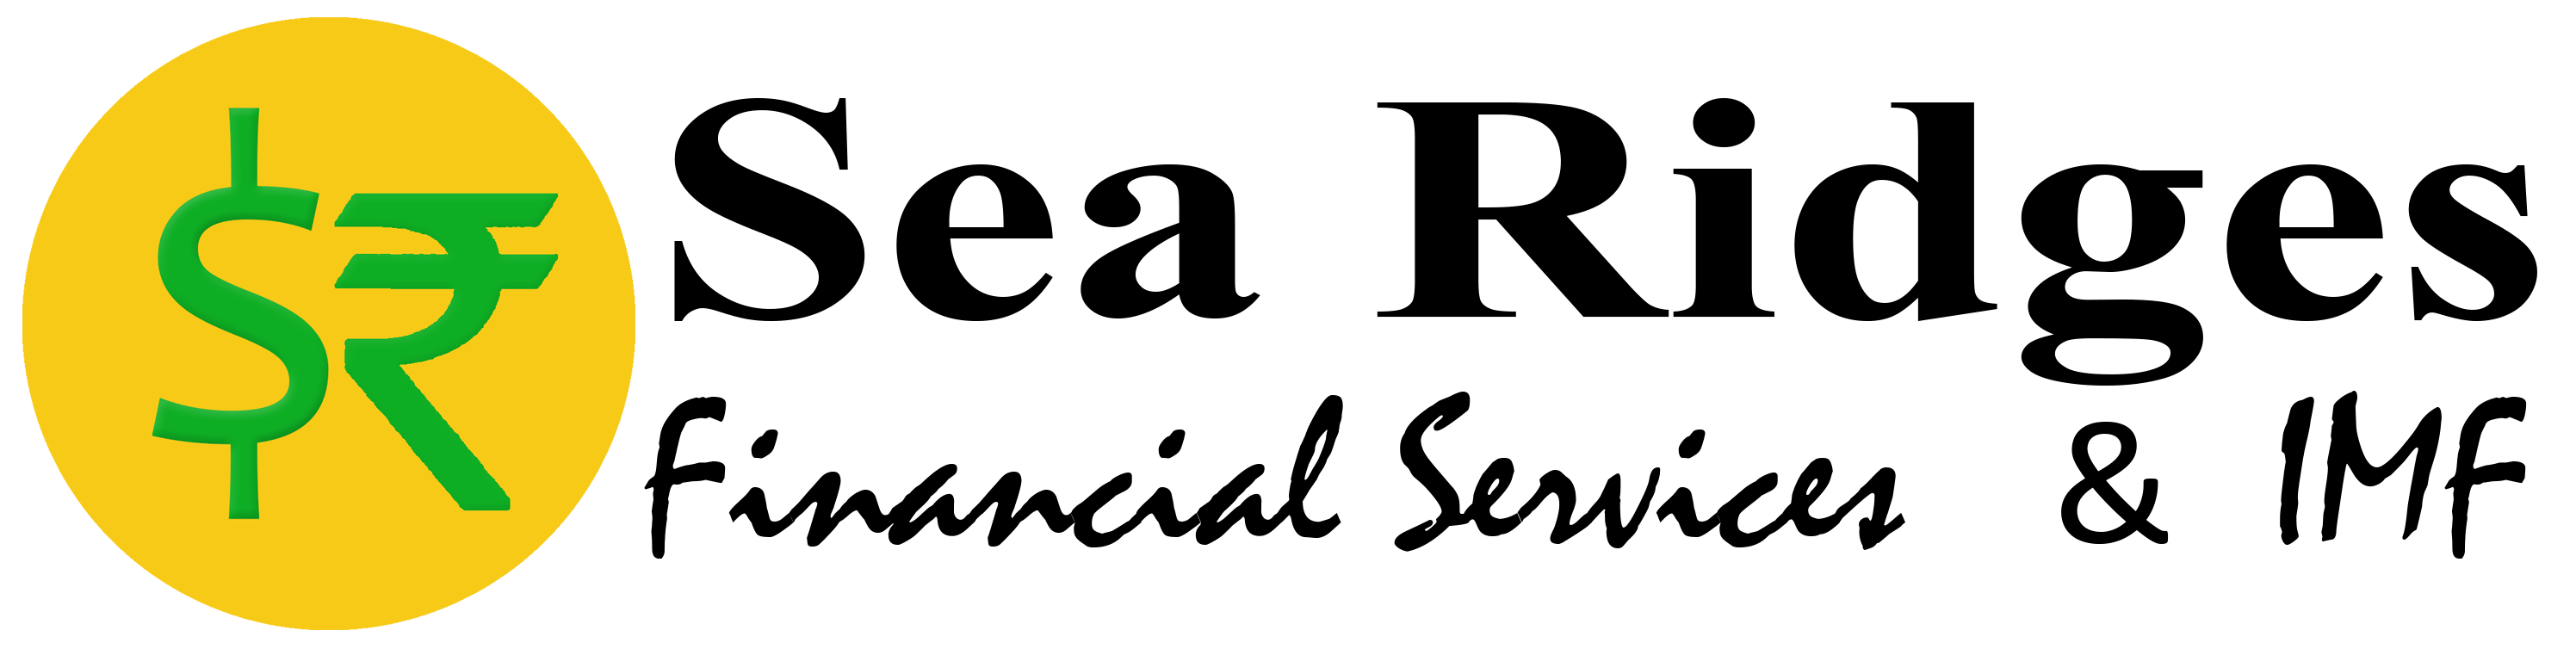 Sea Ridges Financial Services & IMF LLP Logo